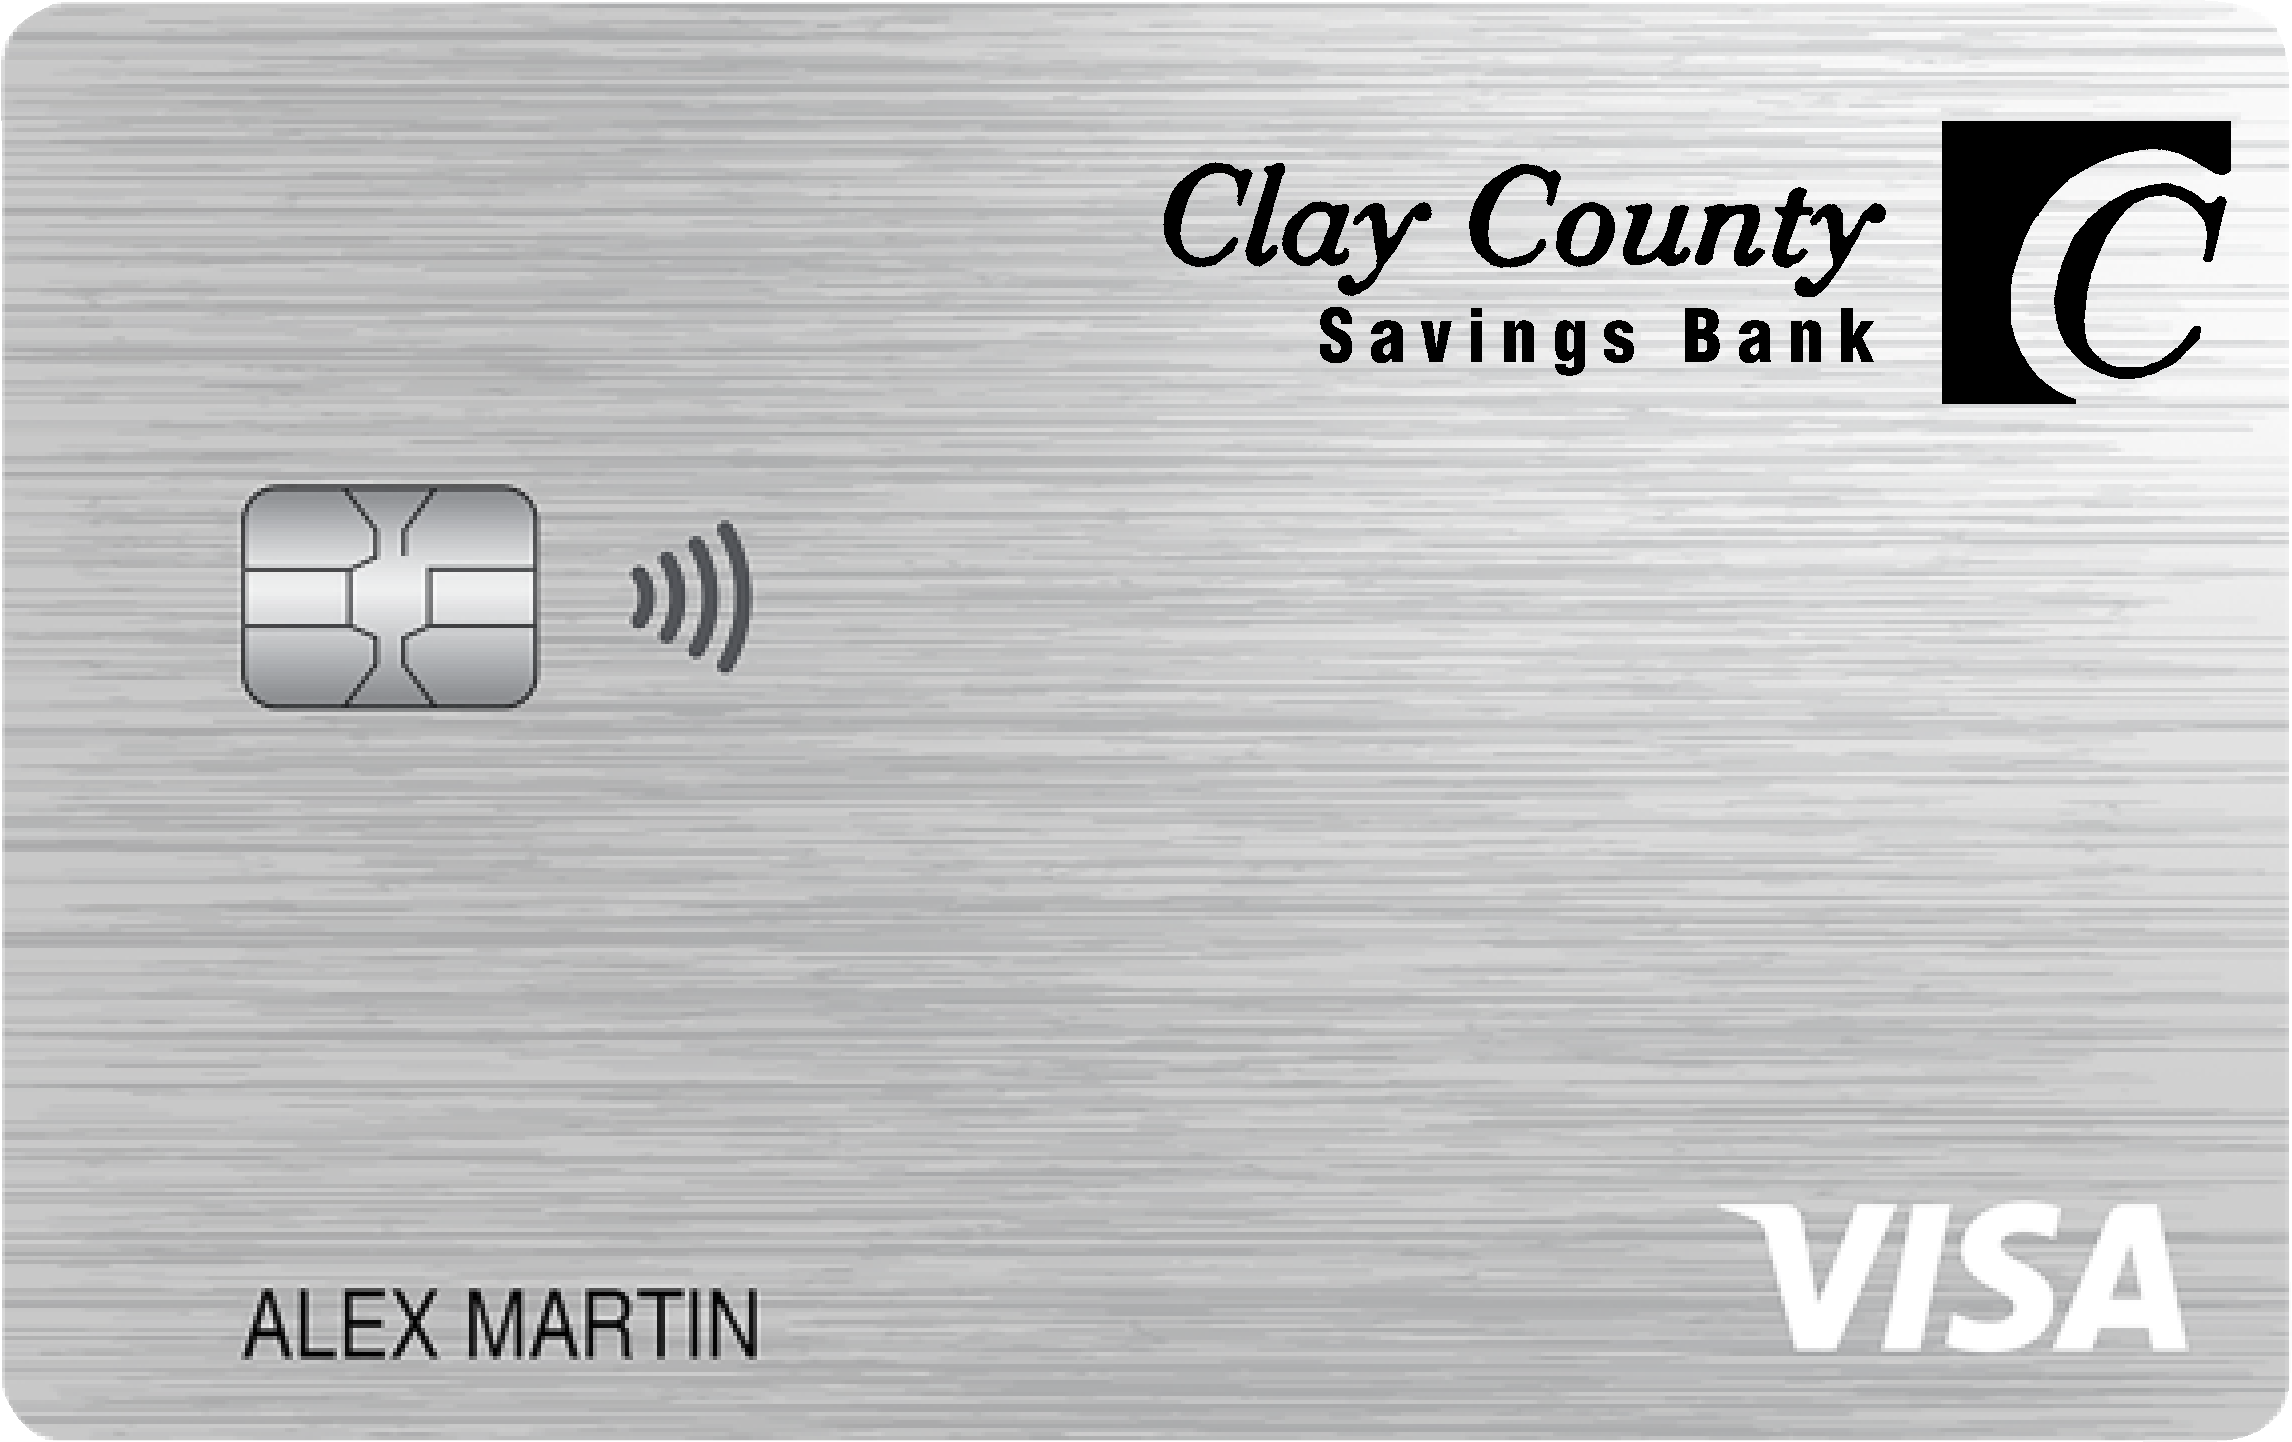 Clay County Savings Bank